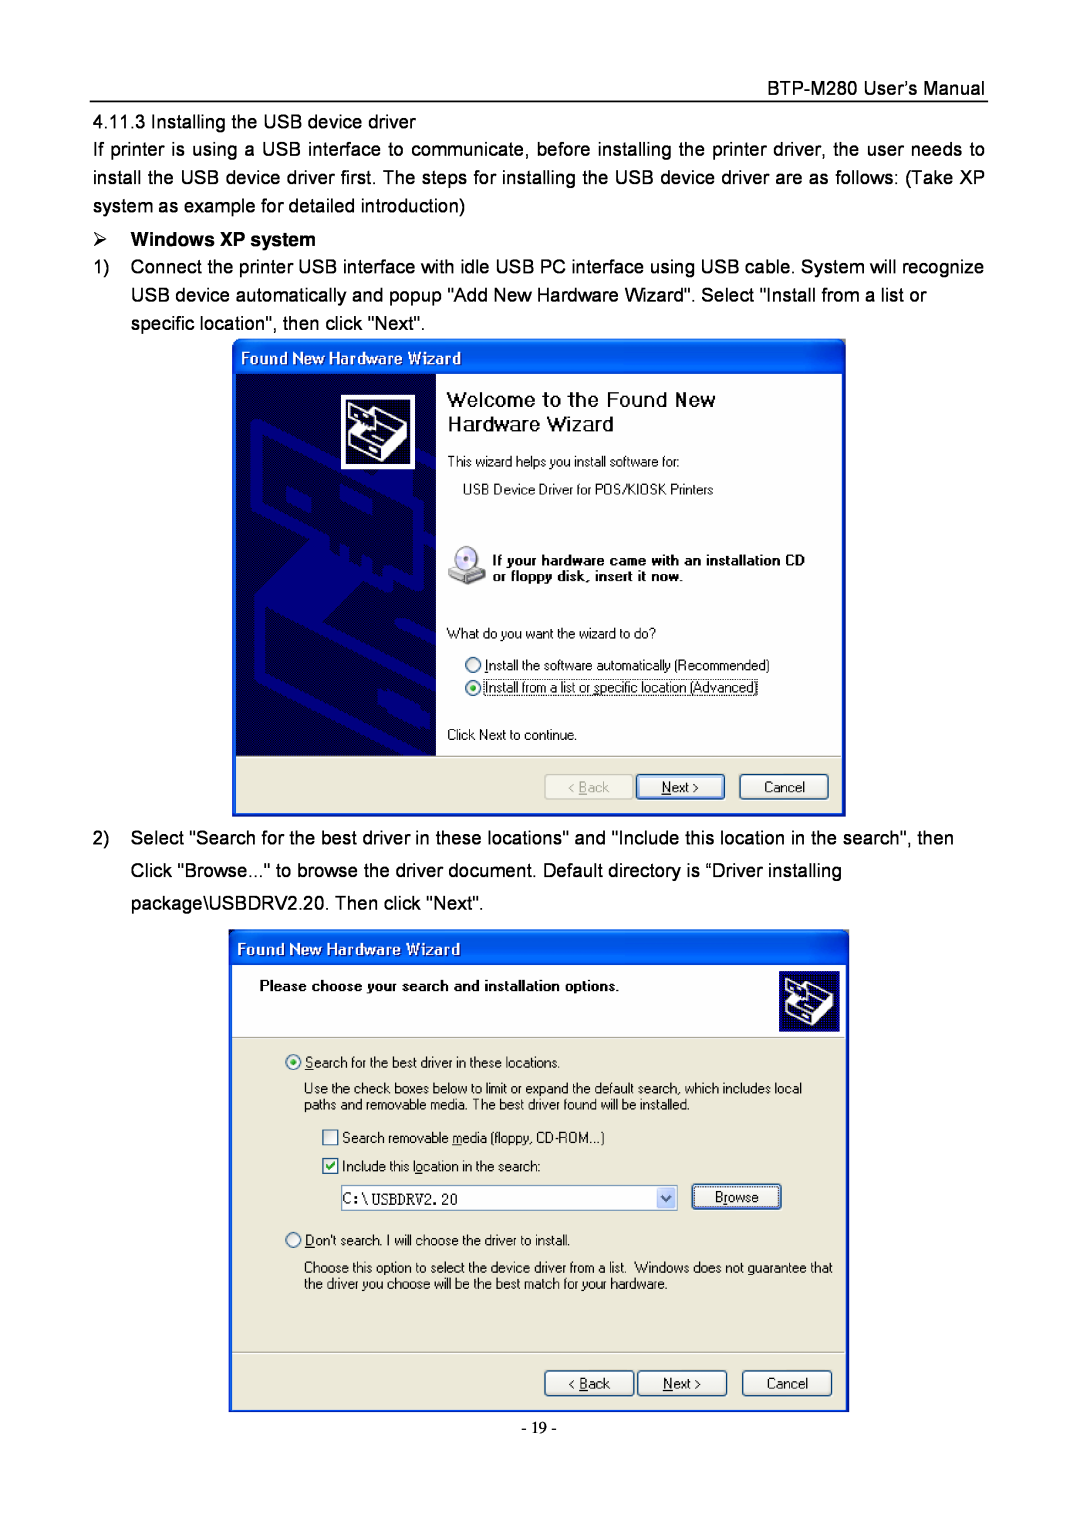 Jiaye General Merchandise Co BTP-M280 user manual ¾ Windows XP system 